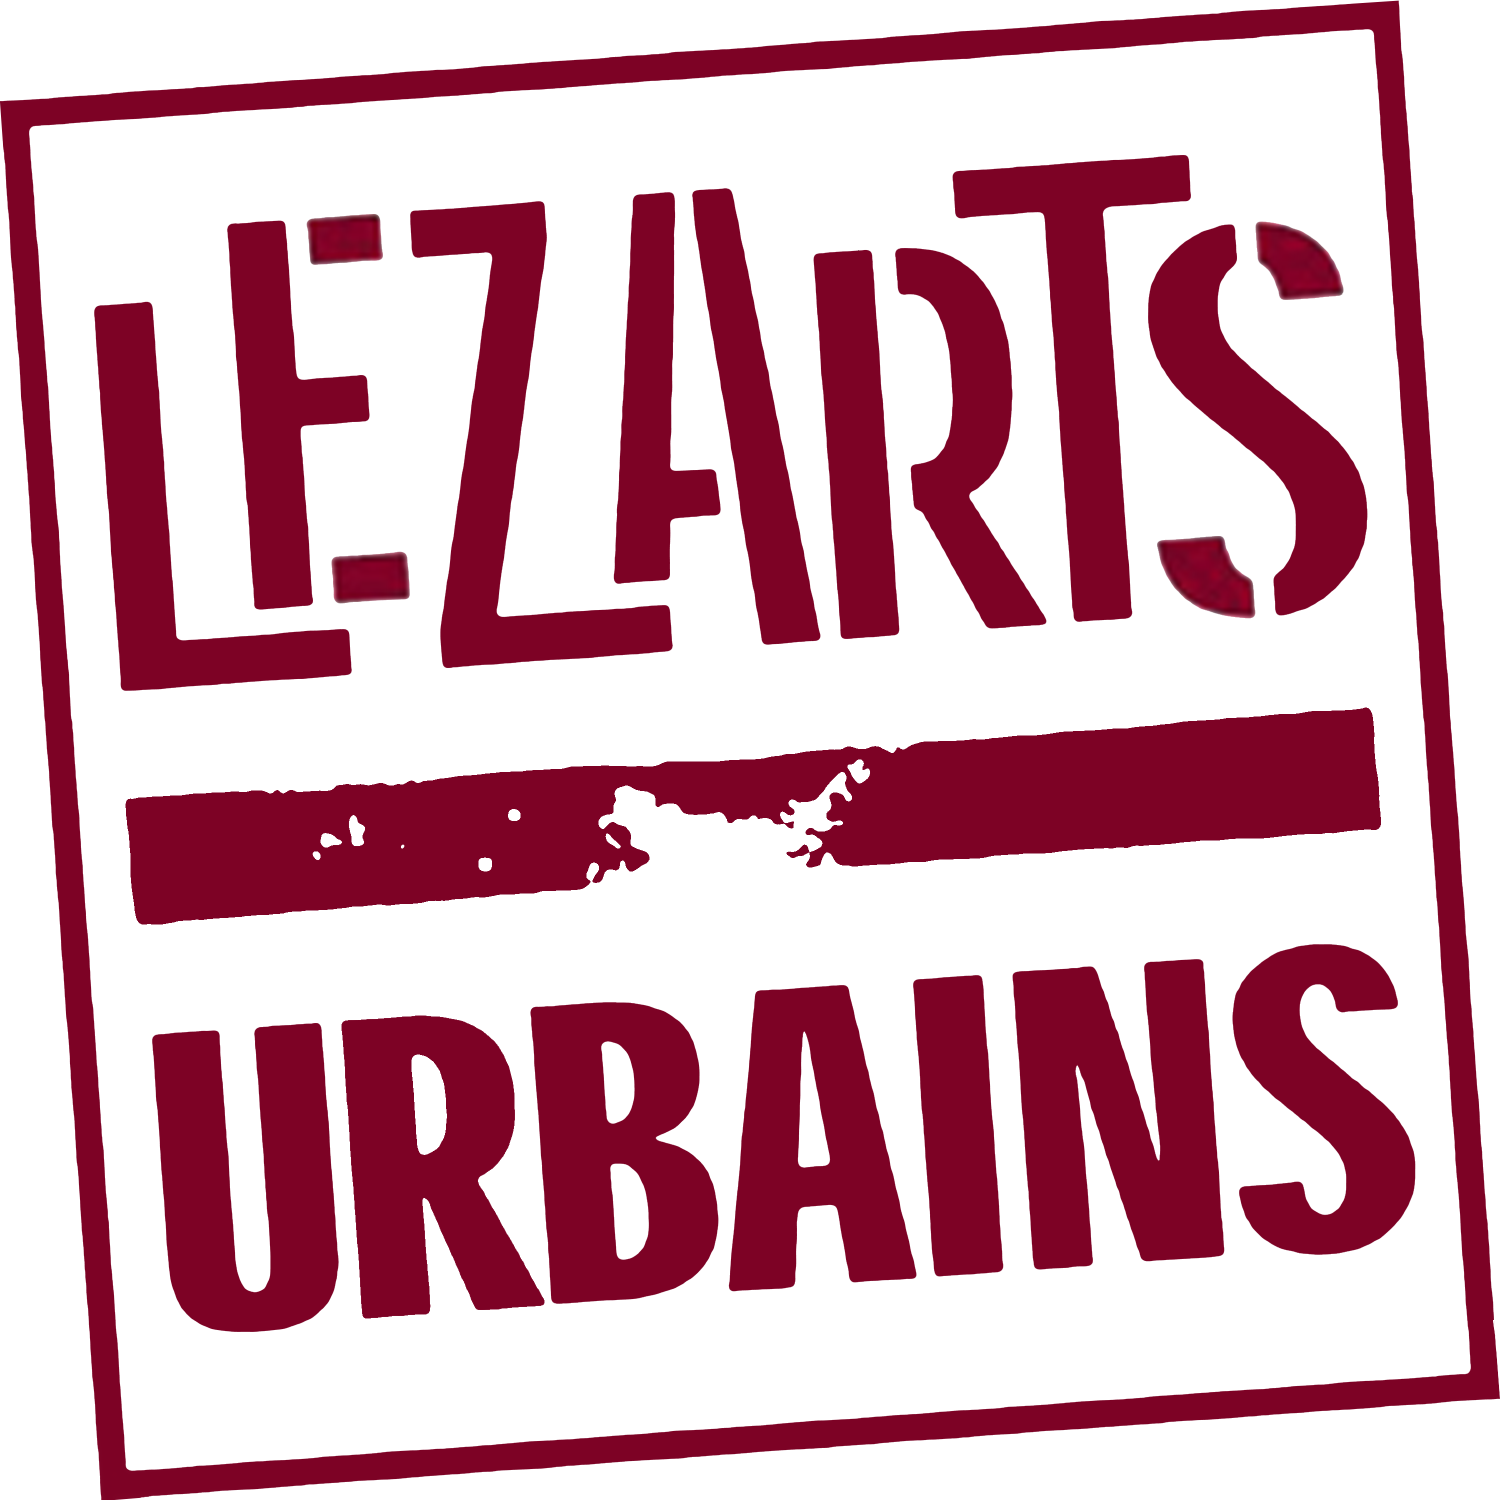 (c) Lezarts-urbains.be